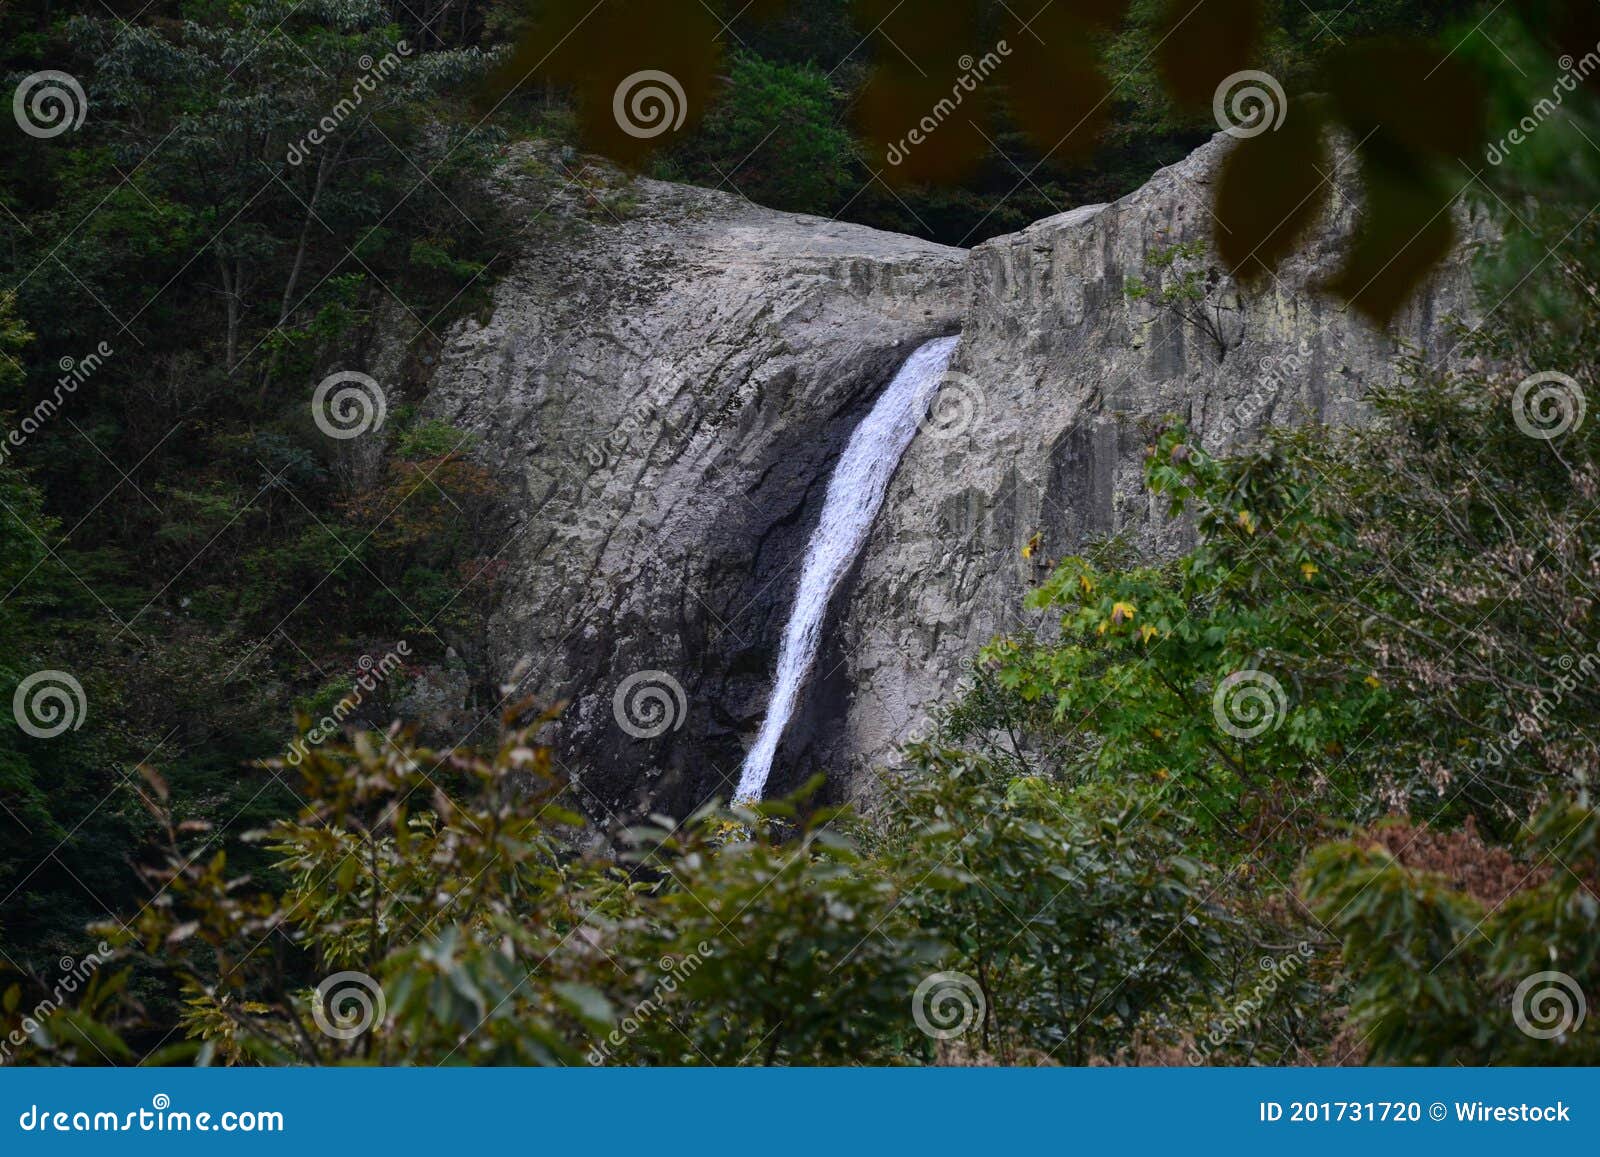 mesmerizing view of jikso falls in byeonsan bando national park, south korea